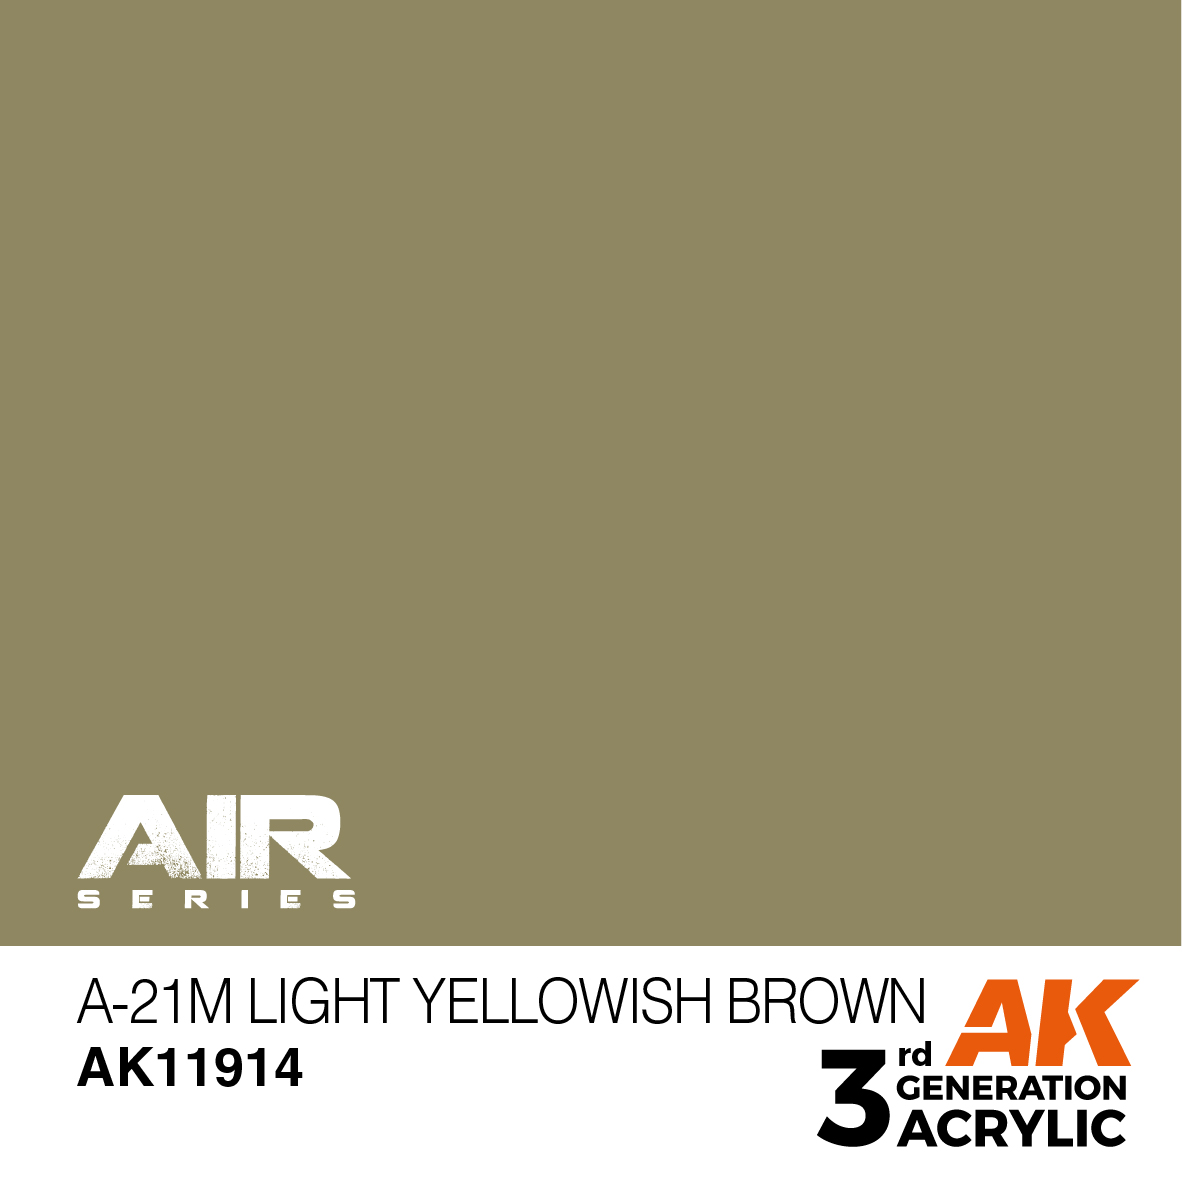 A-21m Light Yellowish Brown – AIR